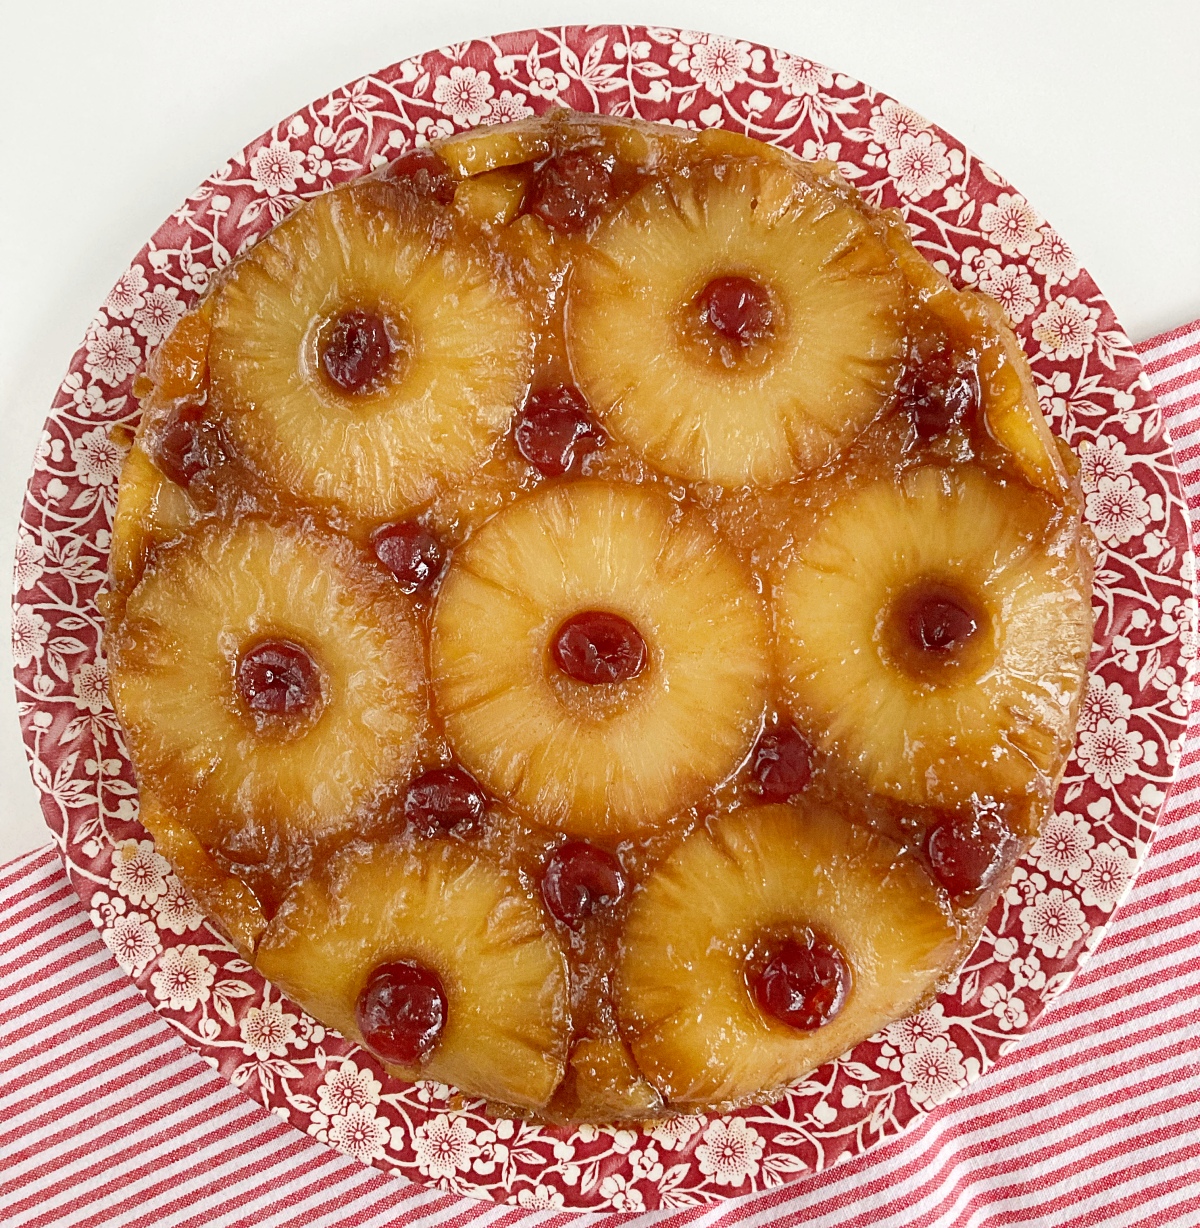 Pineapple Upside-Down Cake Recipe - How to Make Pineapple Upside